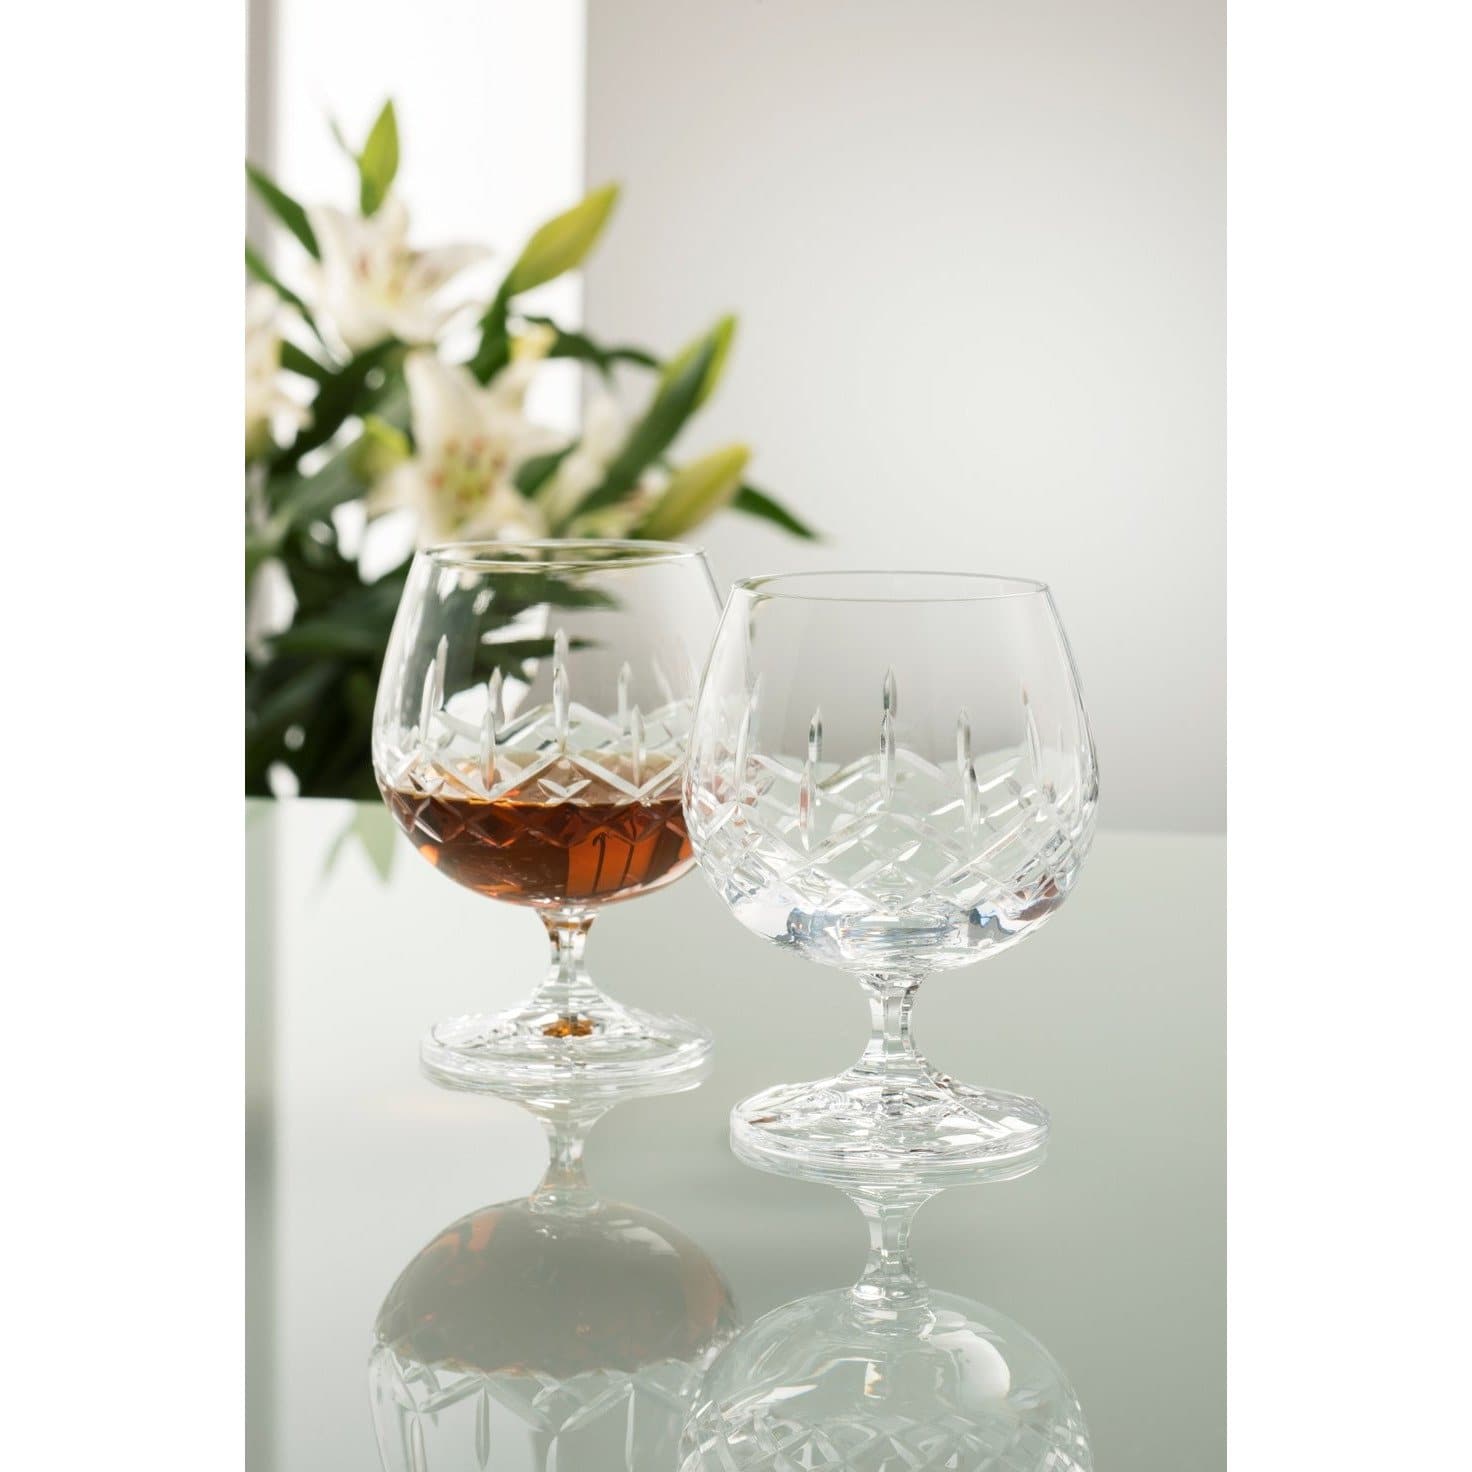 Longford Brandy Glass Pair - Galway Irish Crystal